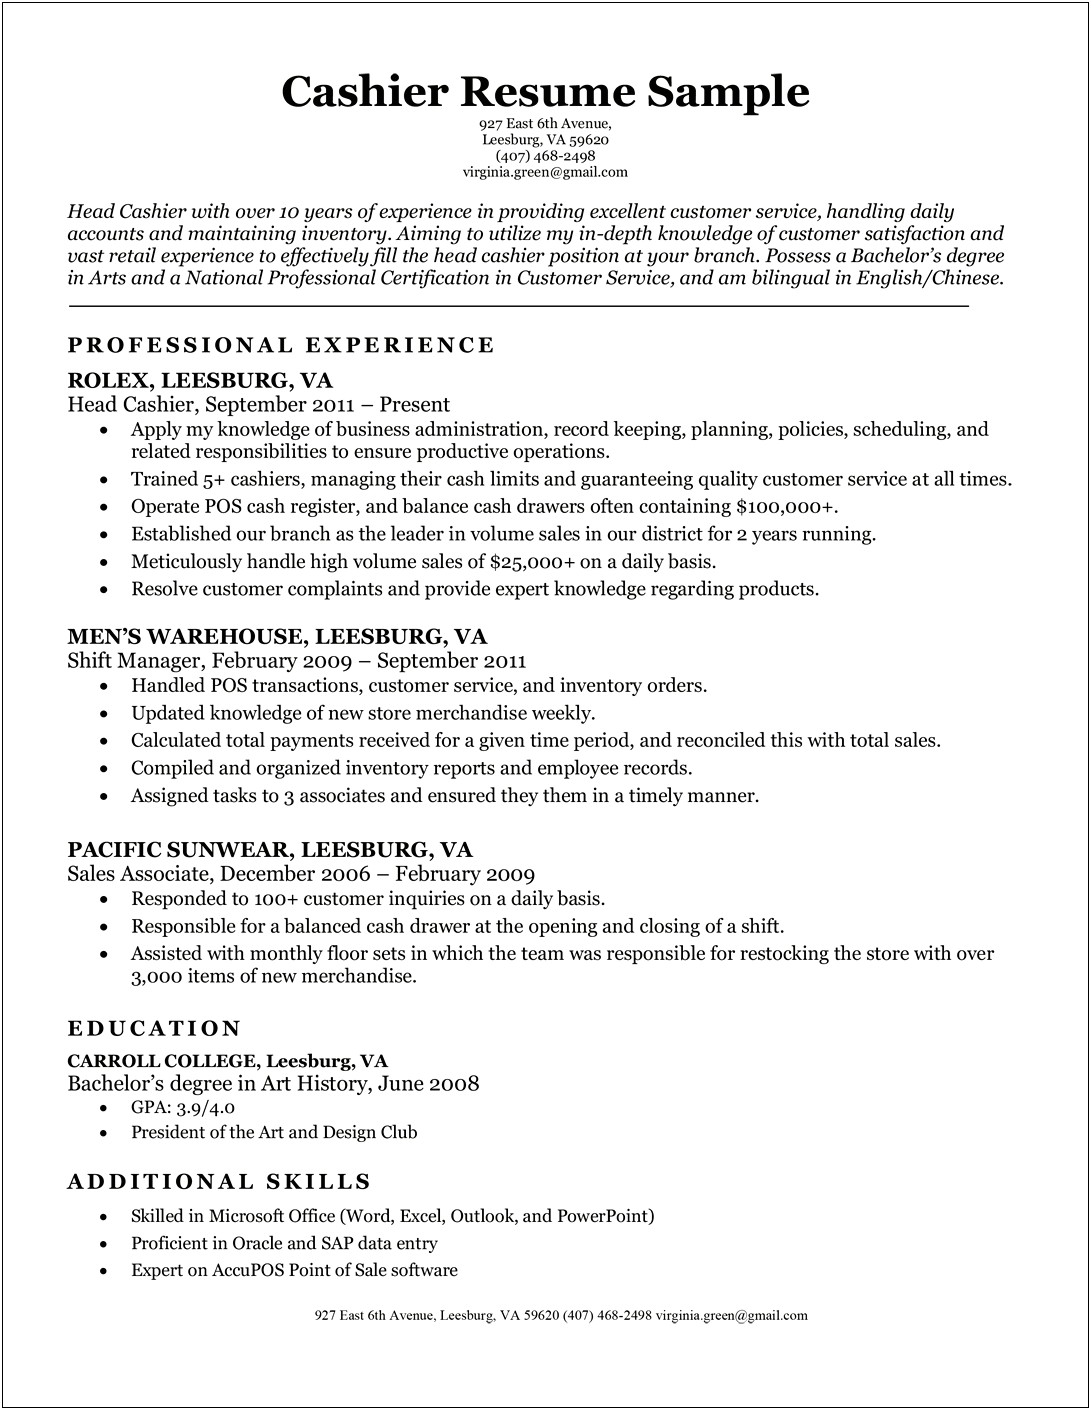 Job Descriptions For Cashier Job On Resume